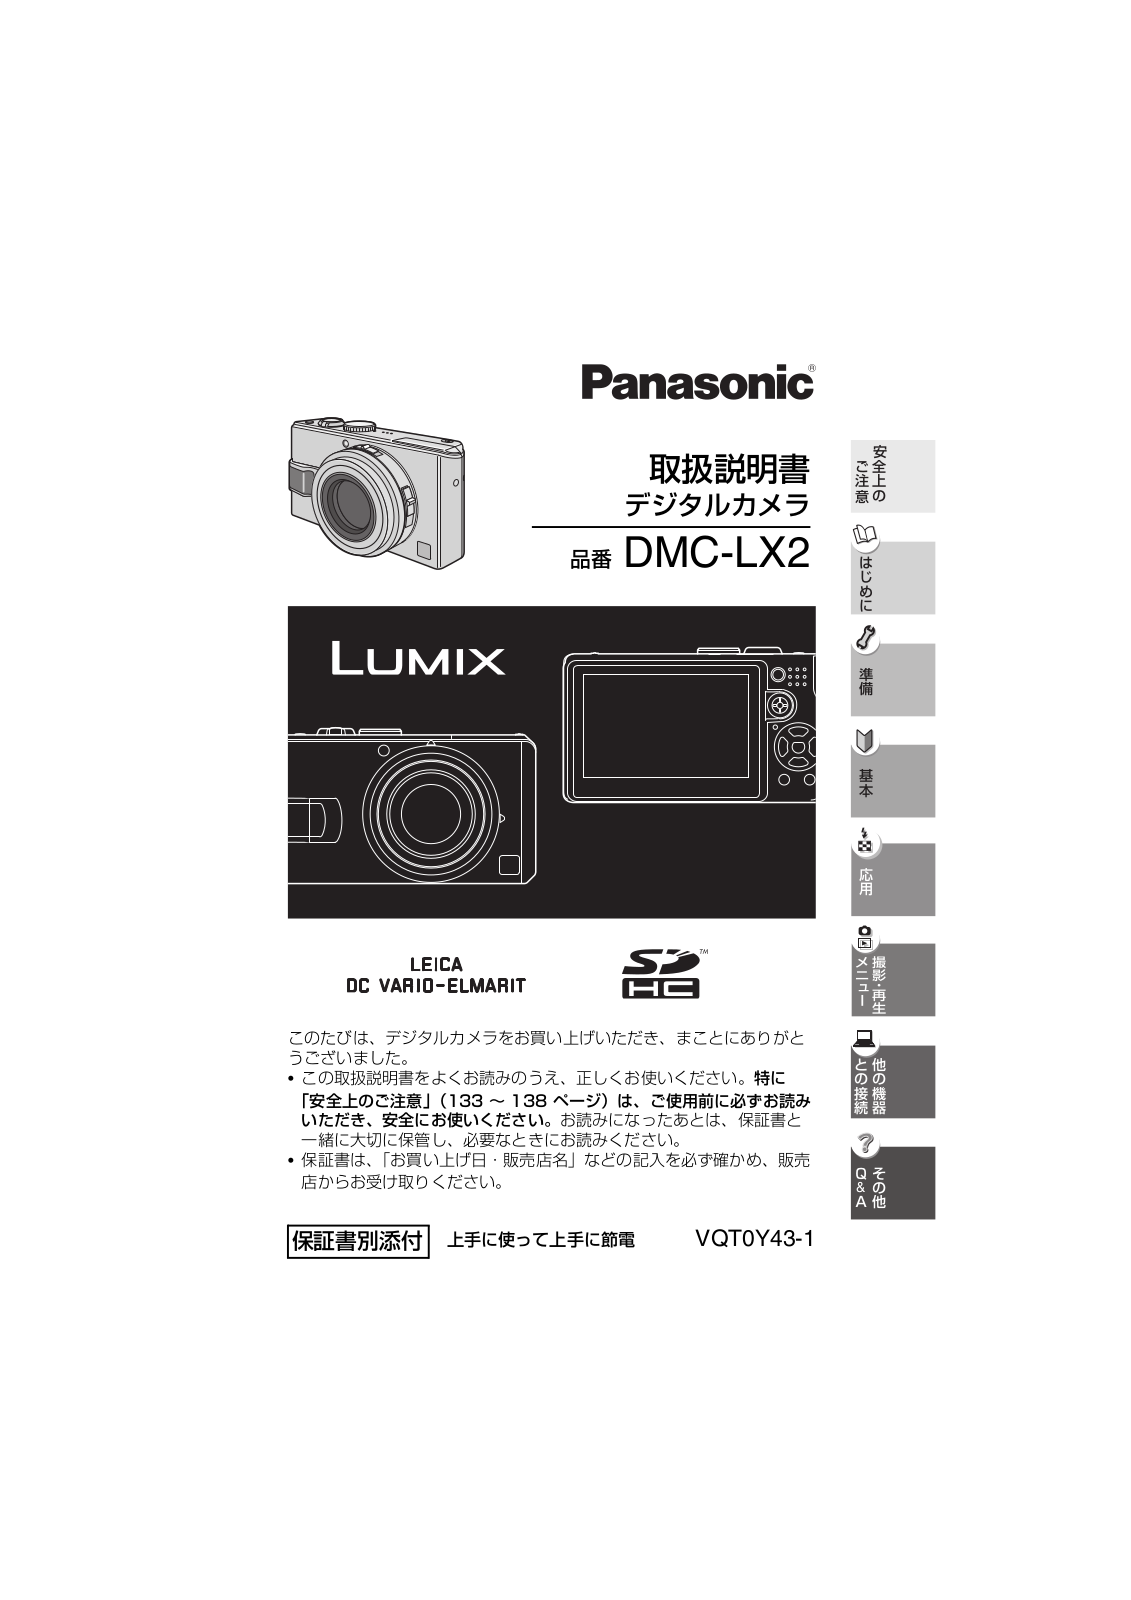 Panasonic LUMIX DMC-LX2 User Manual